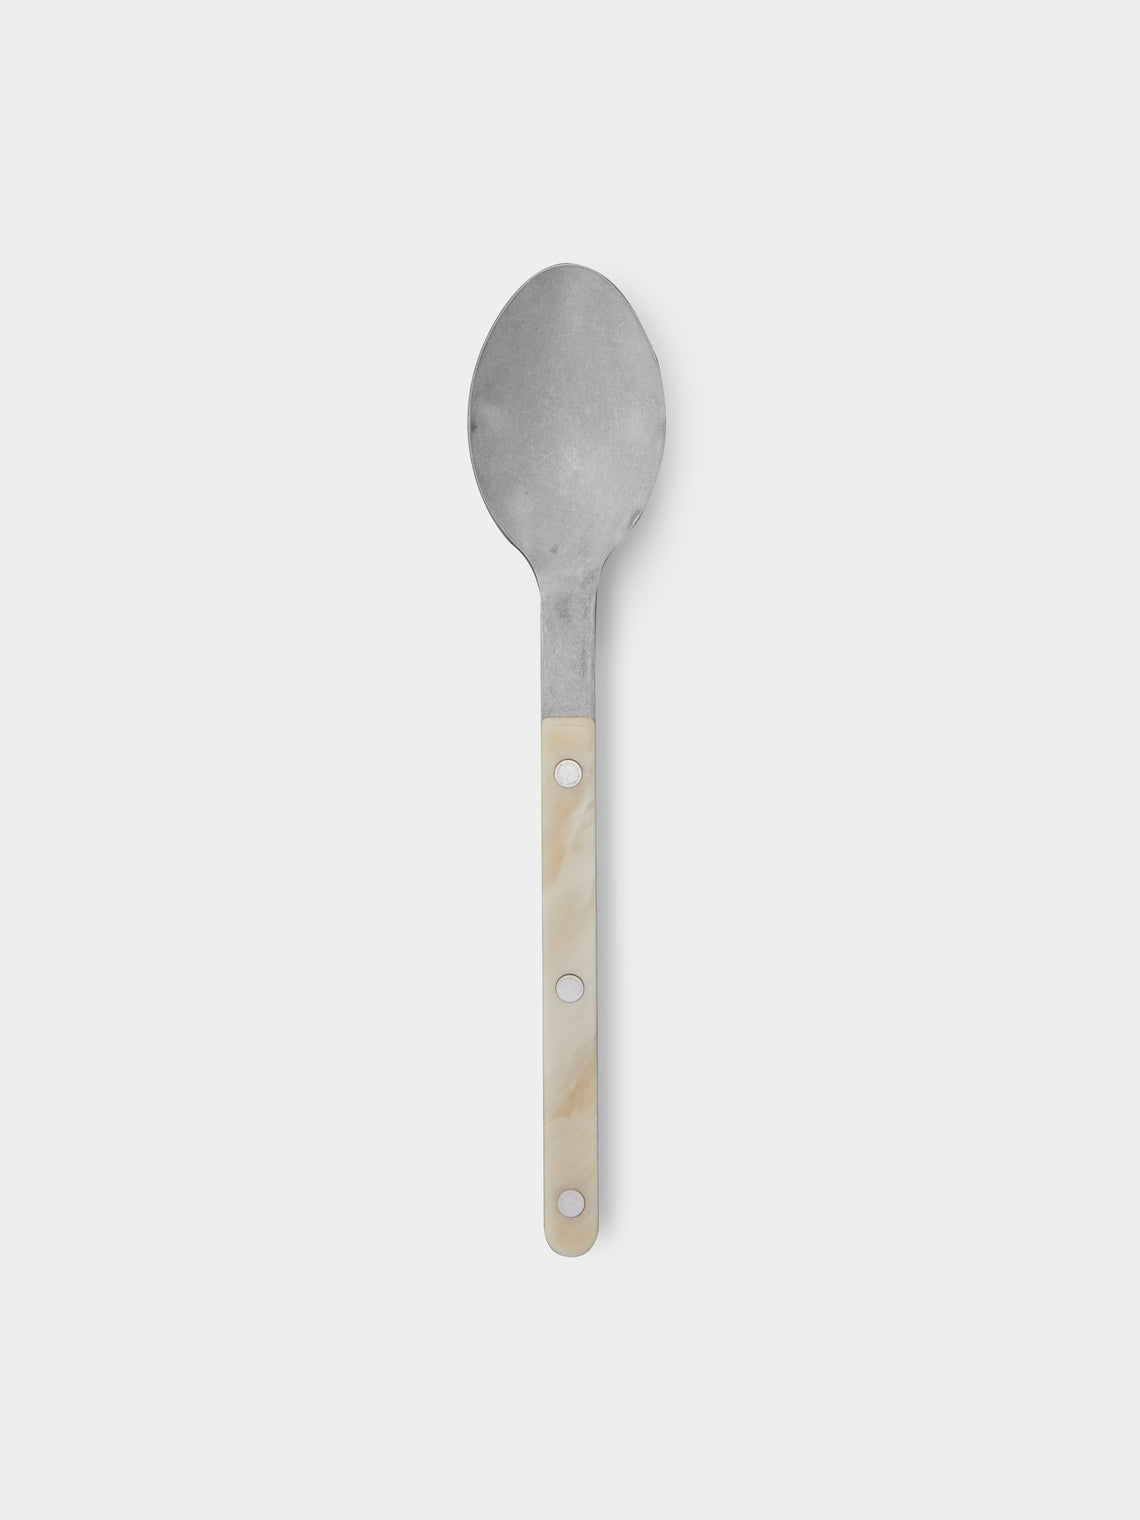 Sabre - Bistrot Dinner Spoon - Taupe - ABASK - 